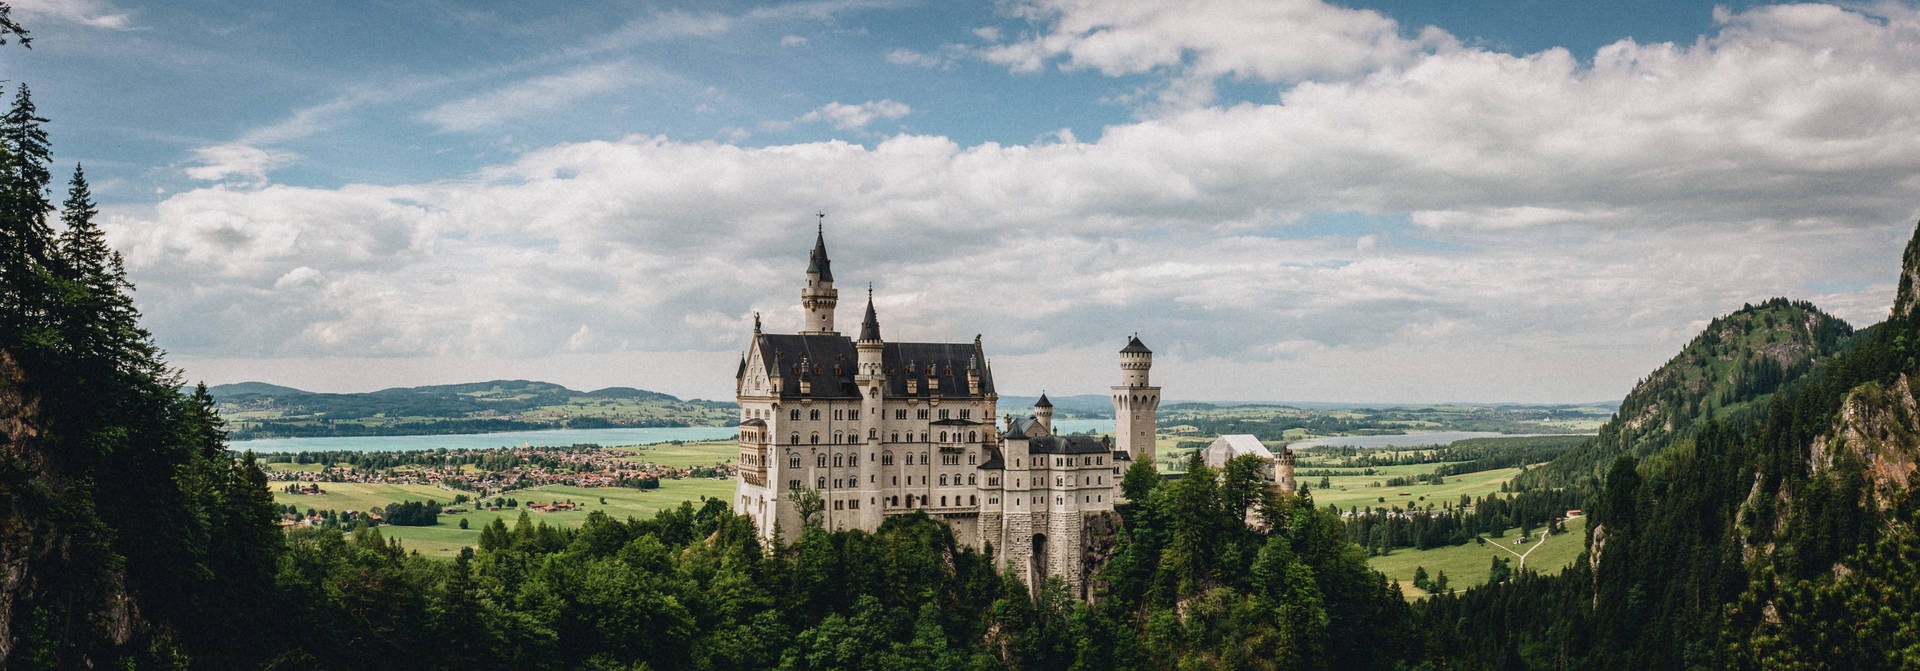 Castle Neuschwanstein Germany Widescreen Wallpaper